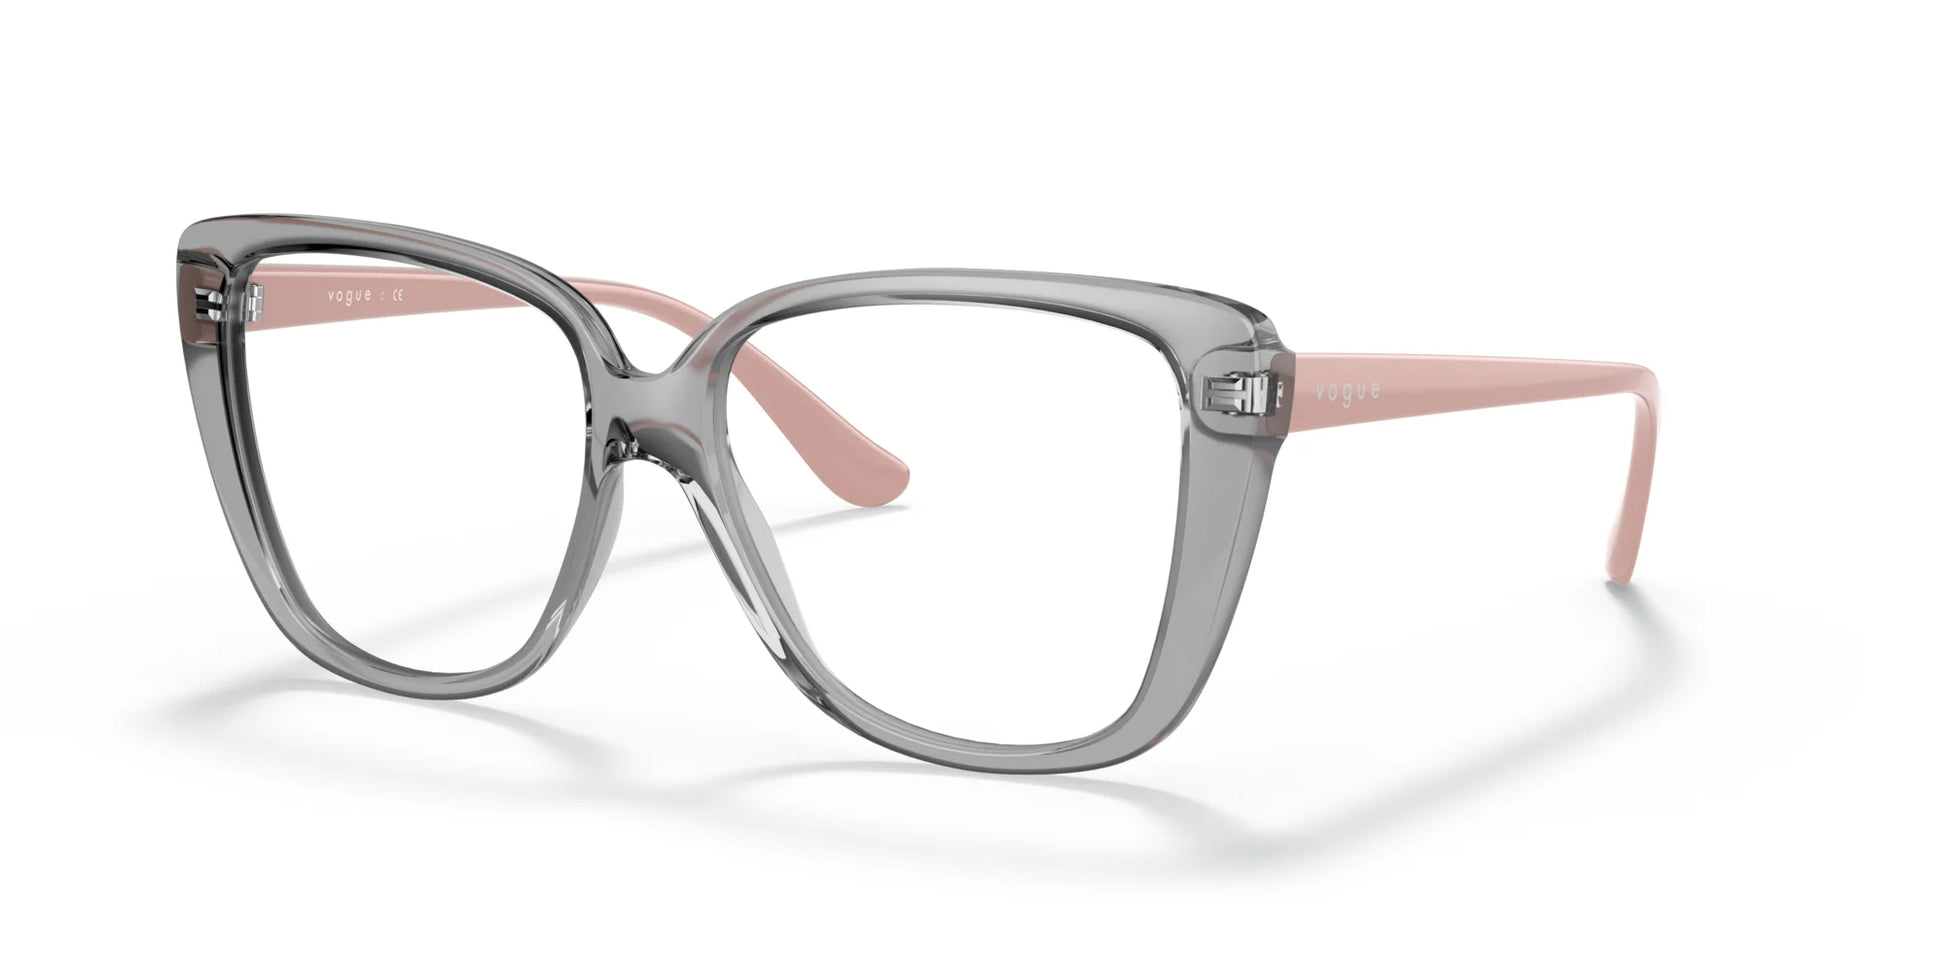 Vogue VO5413F Eyeglasses Transparent Grey